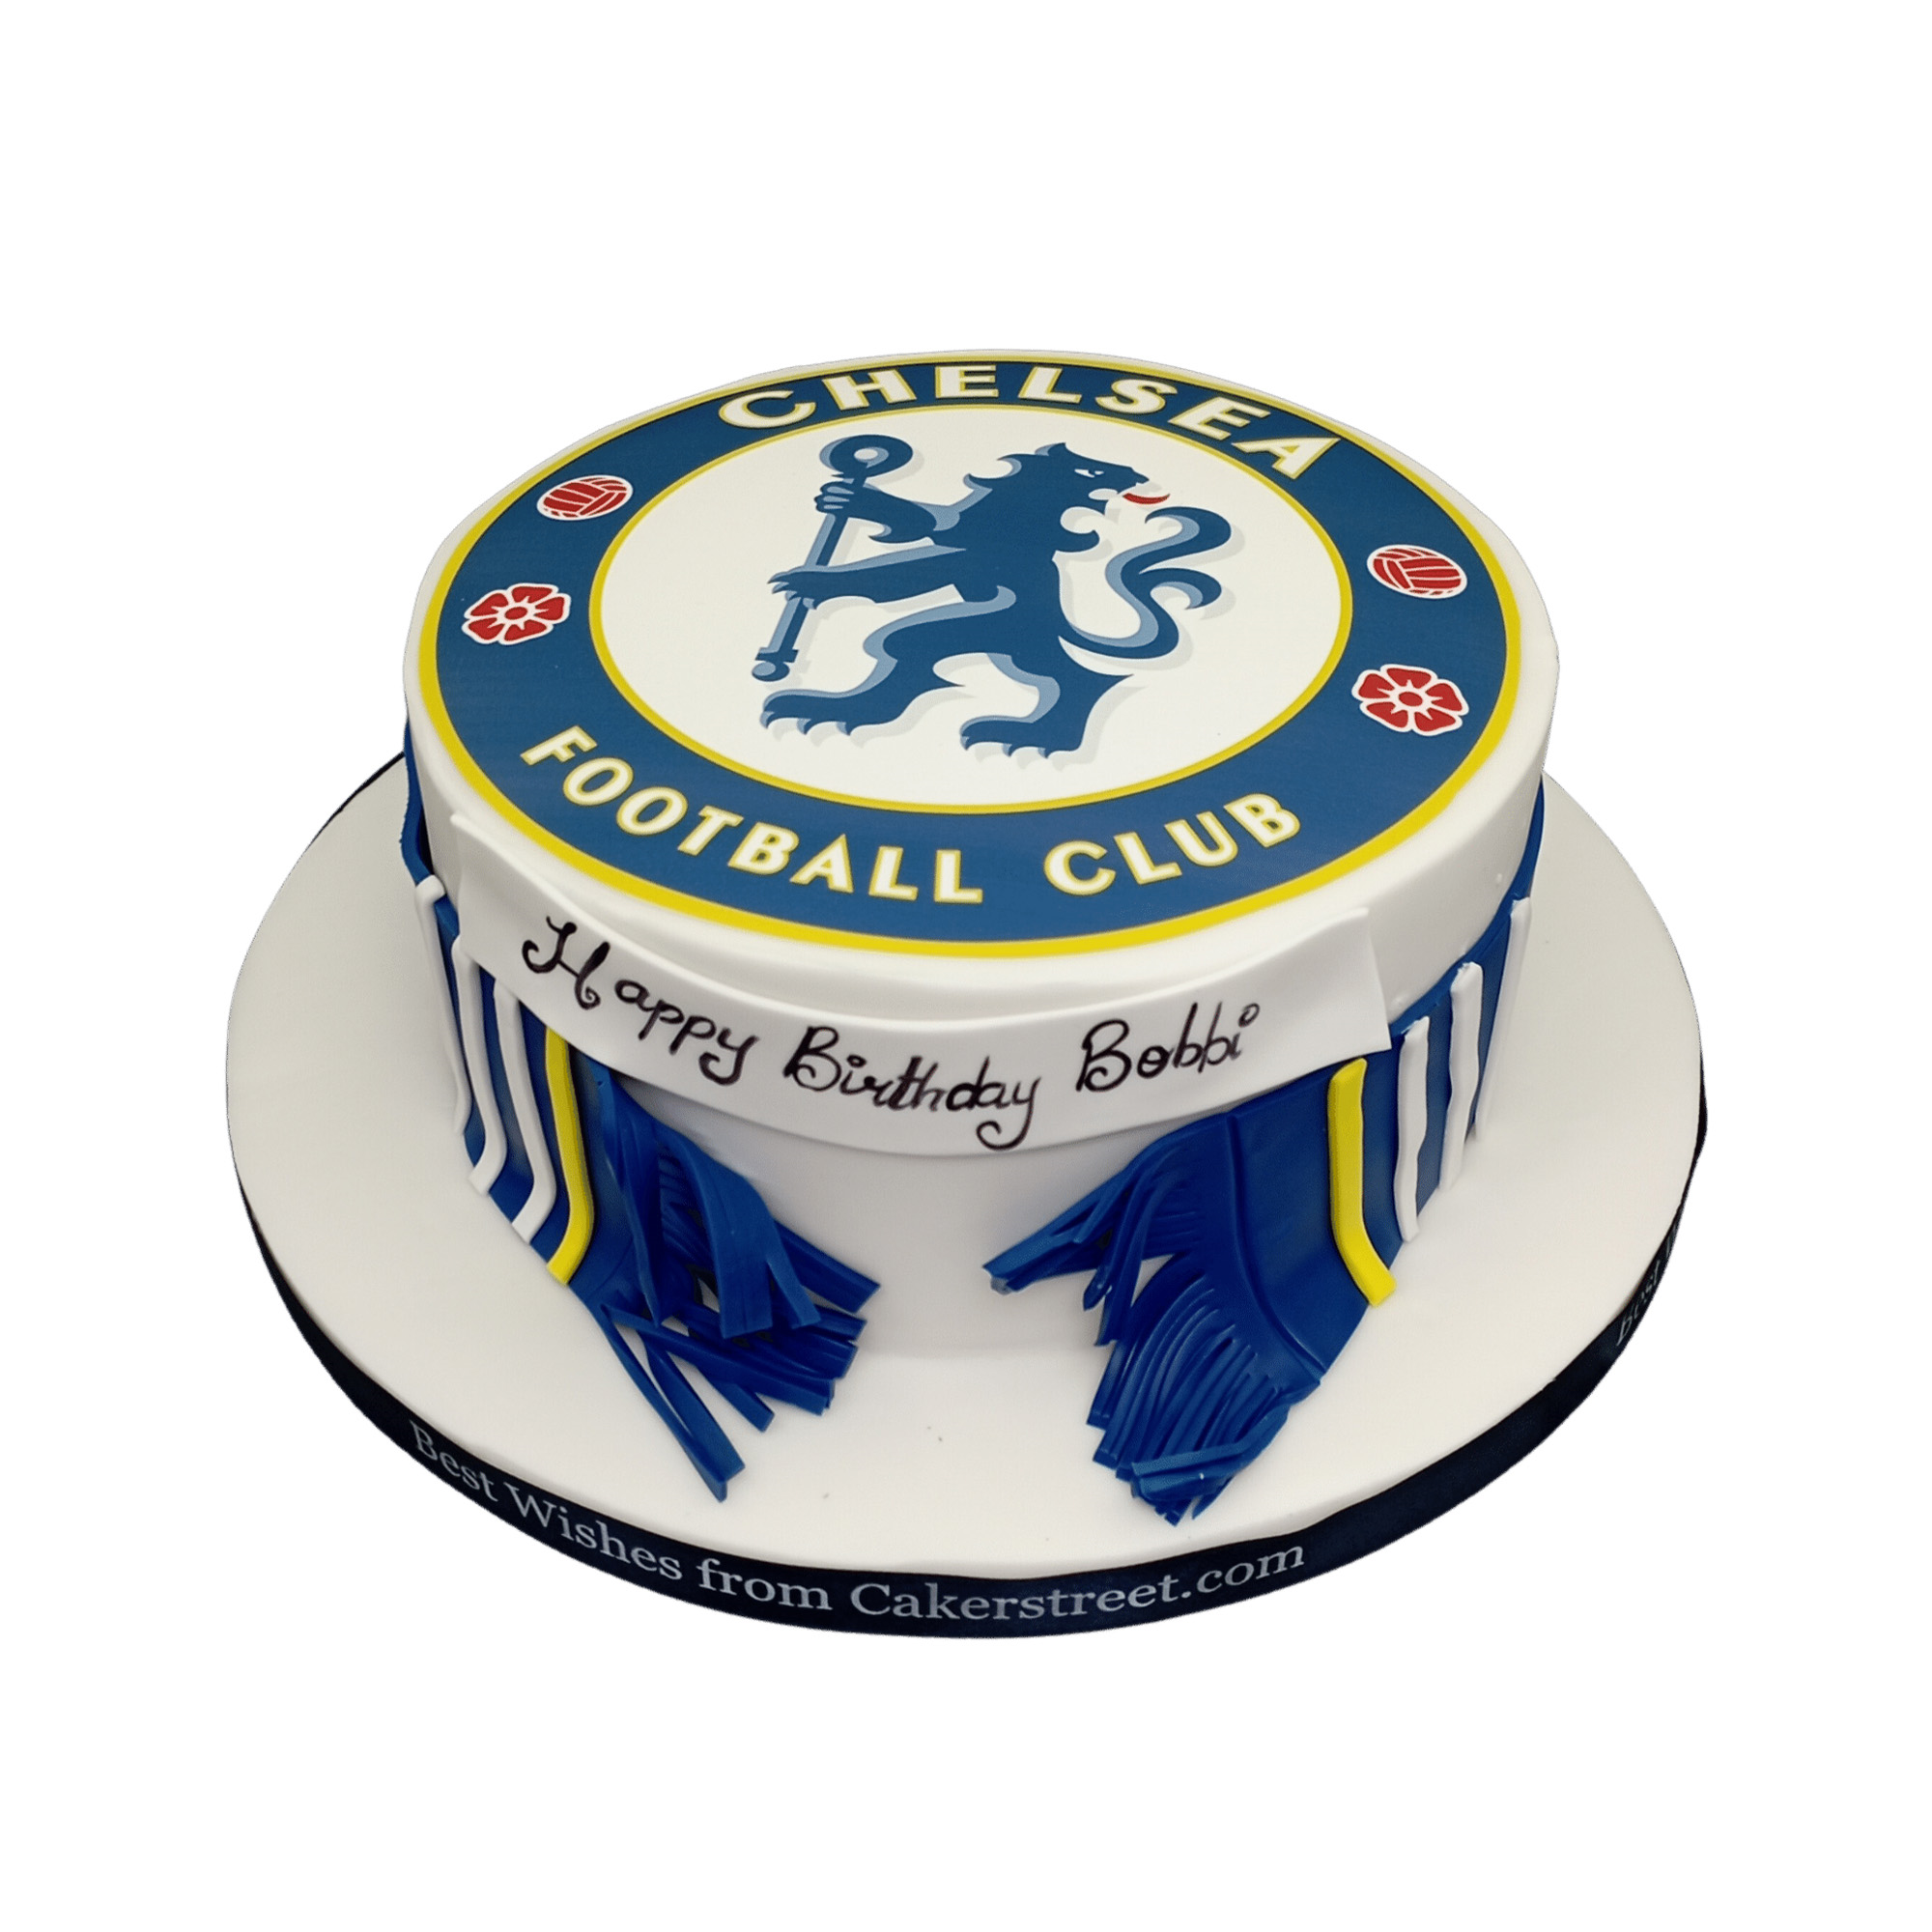 Chelsea cake